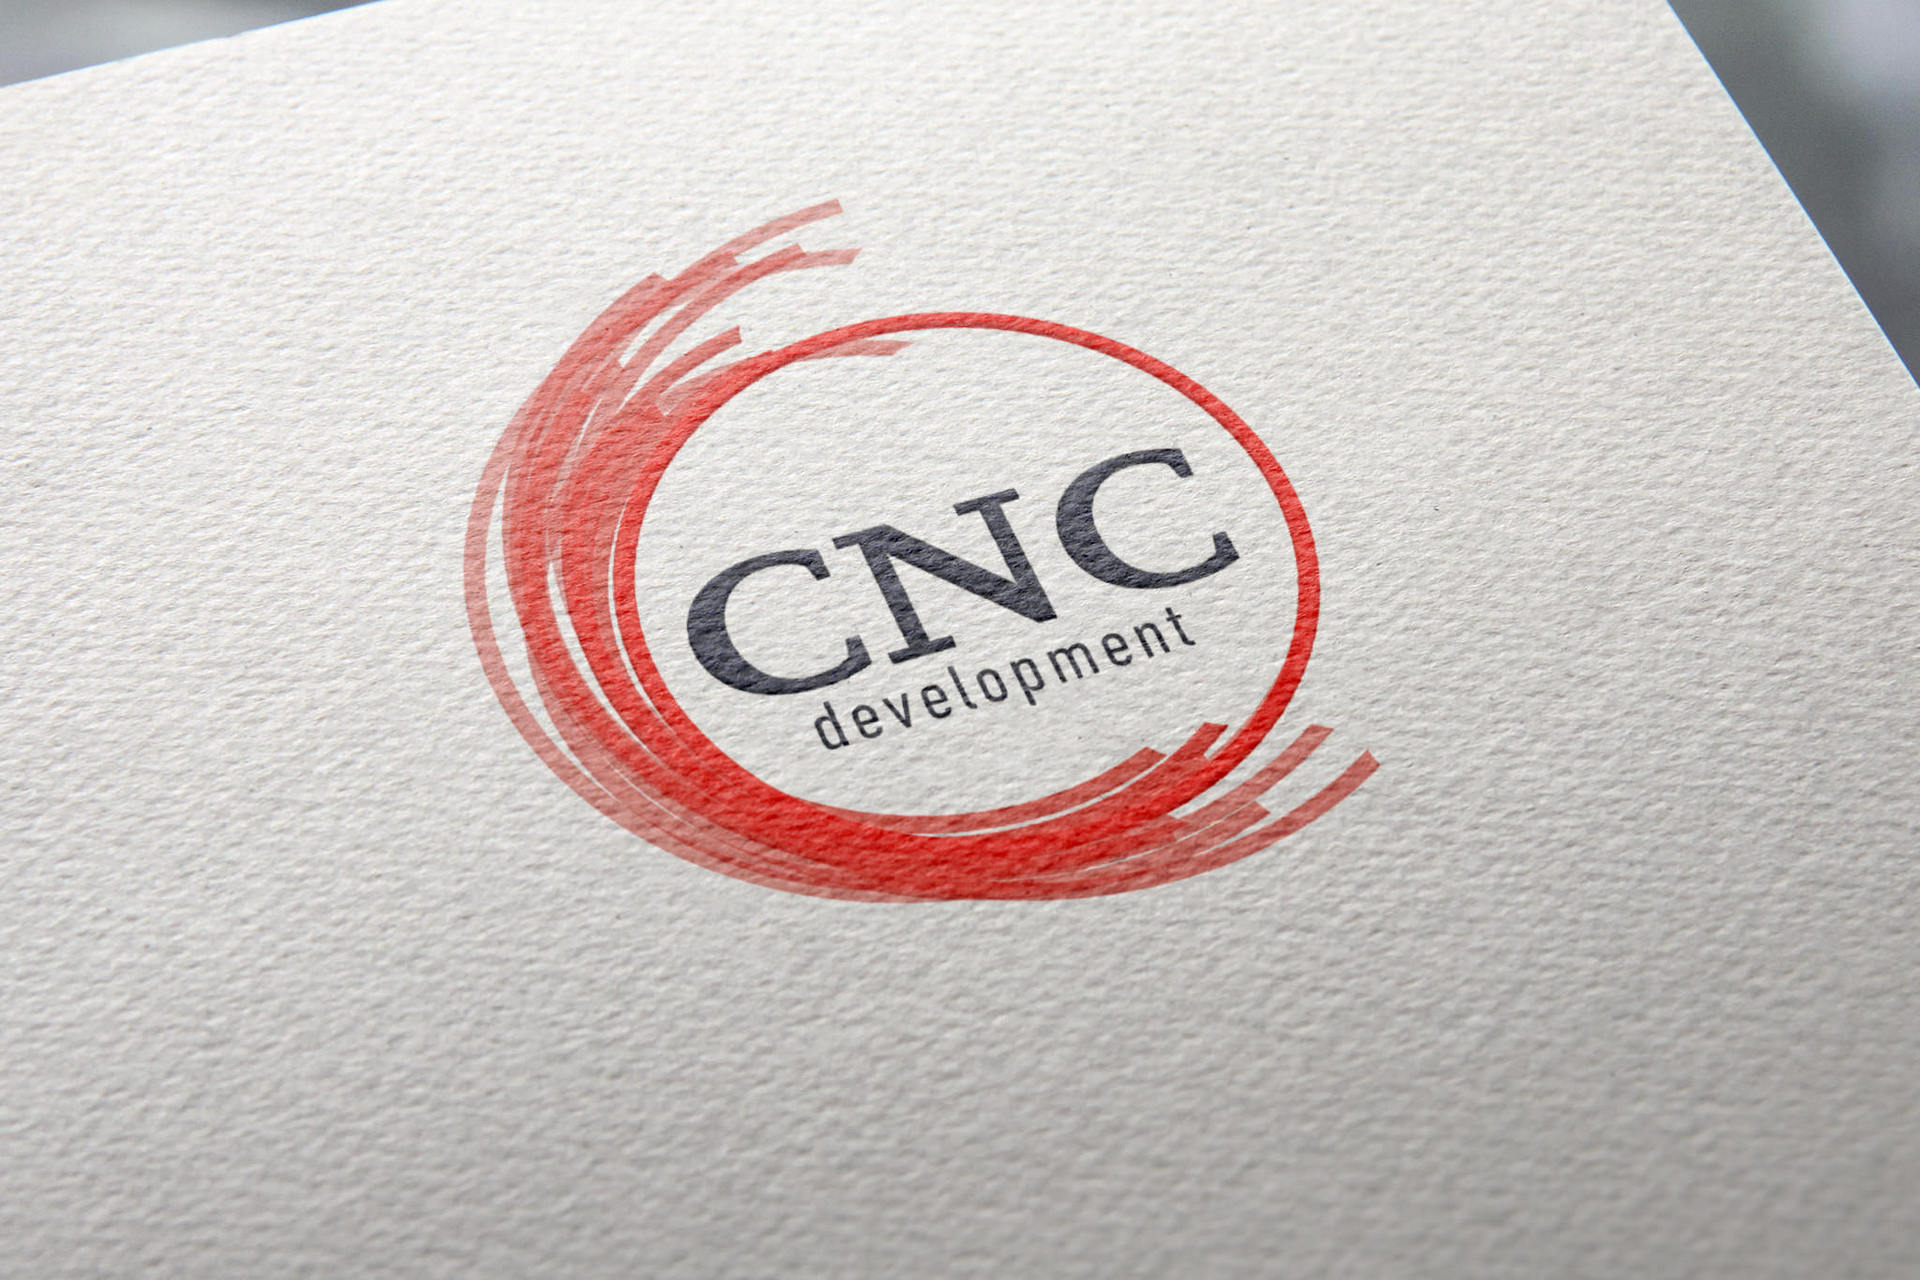 Cnc logo printed